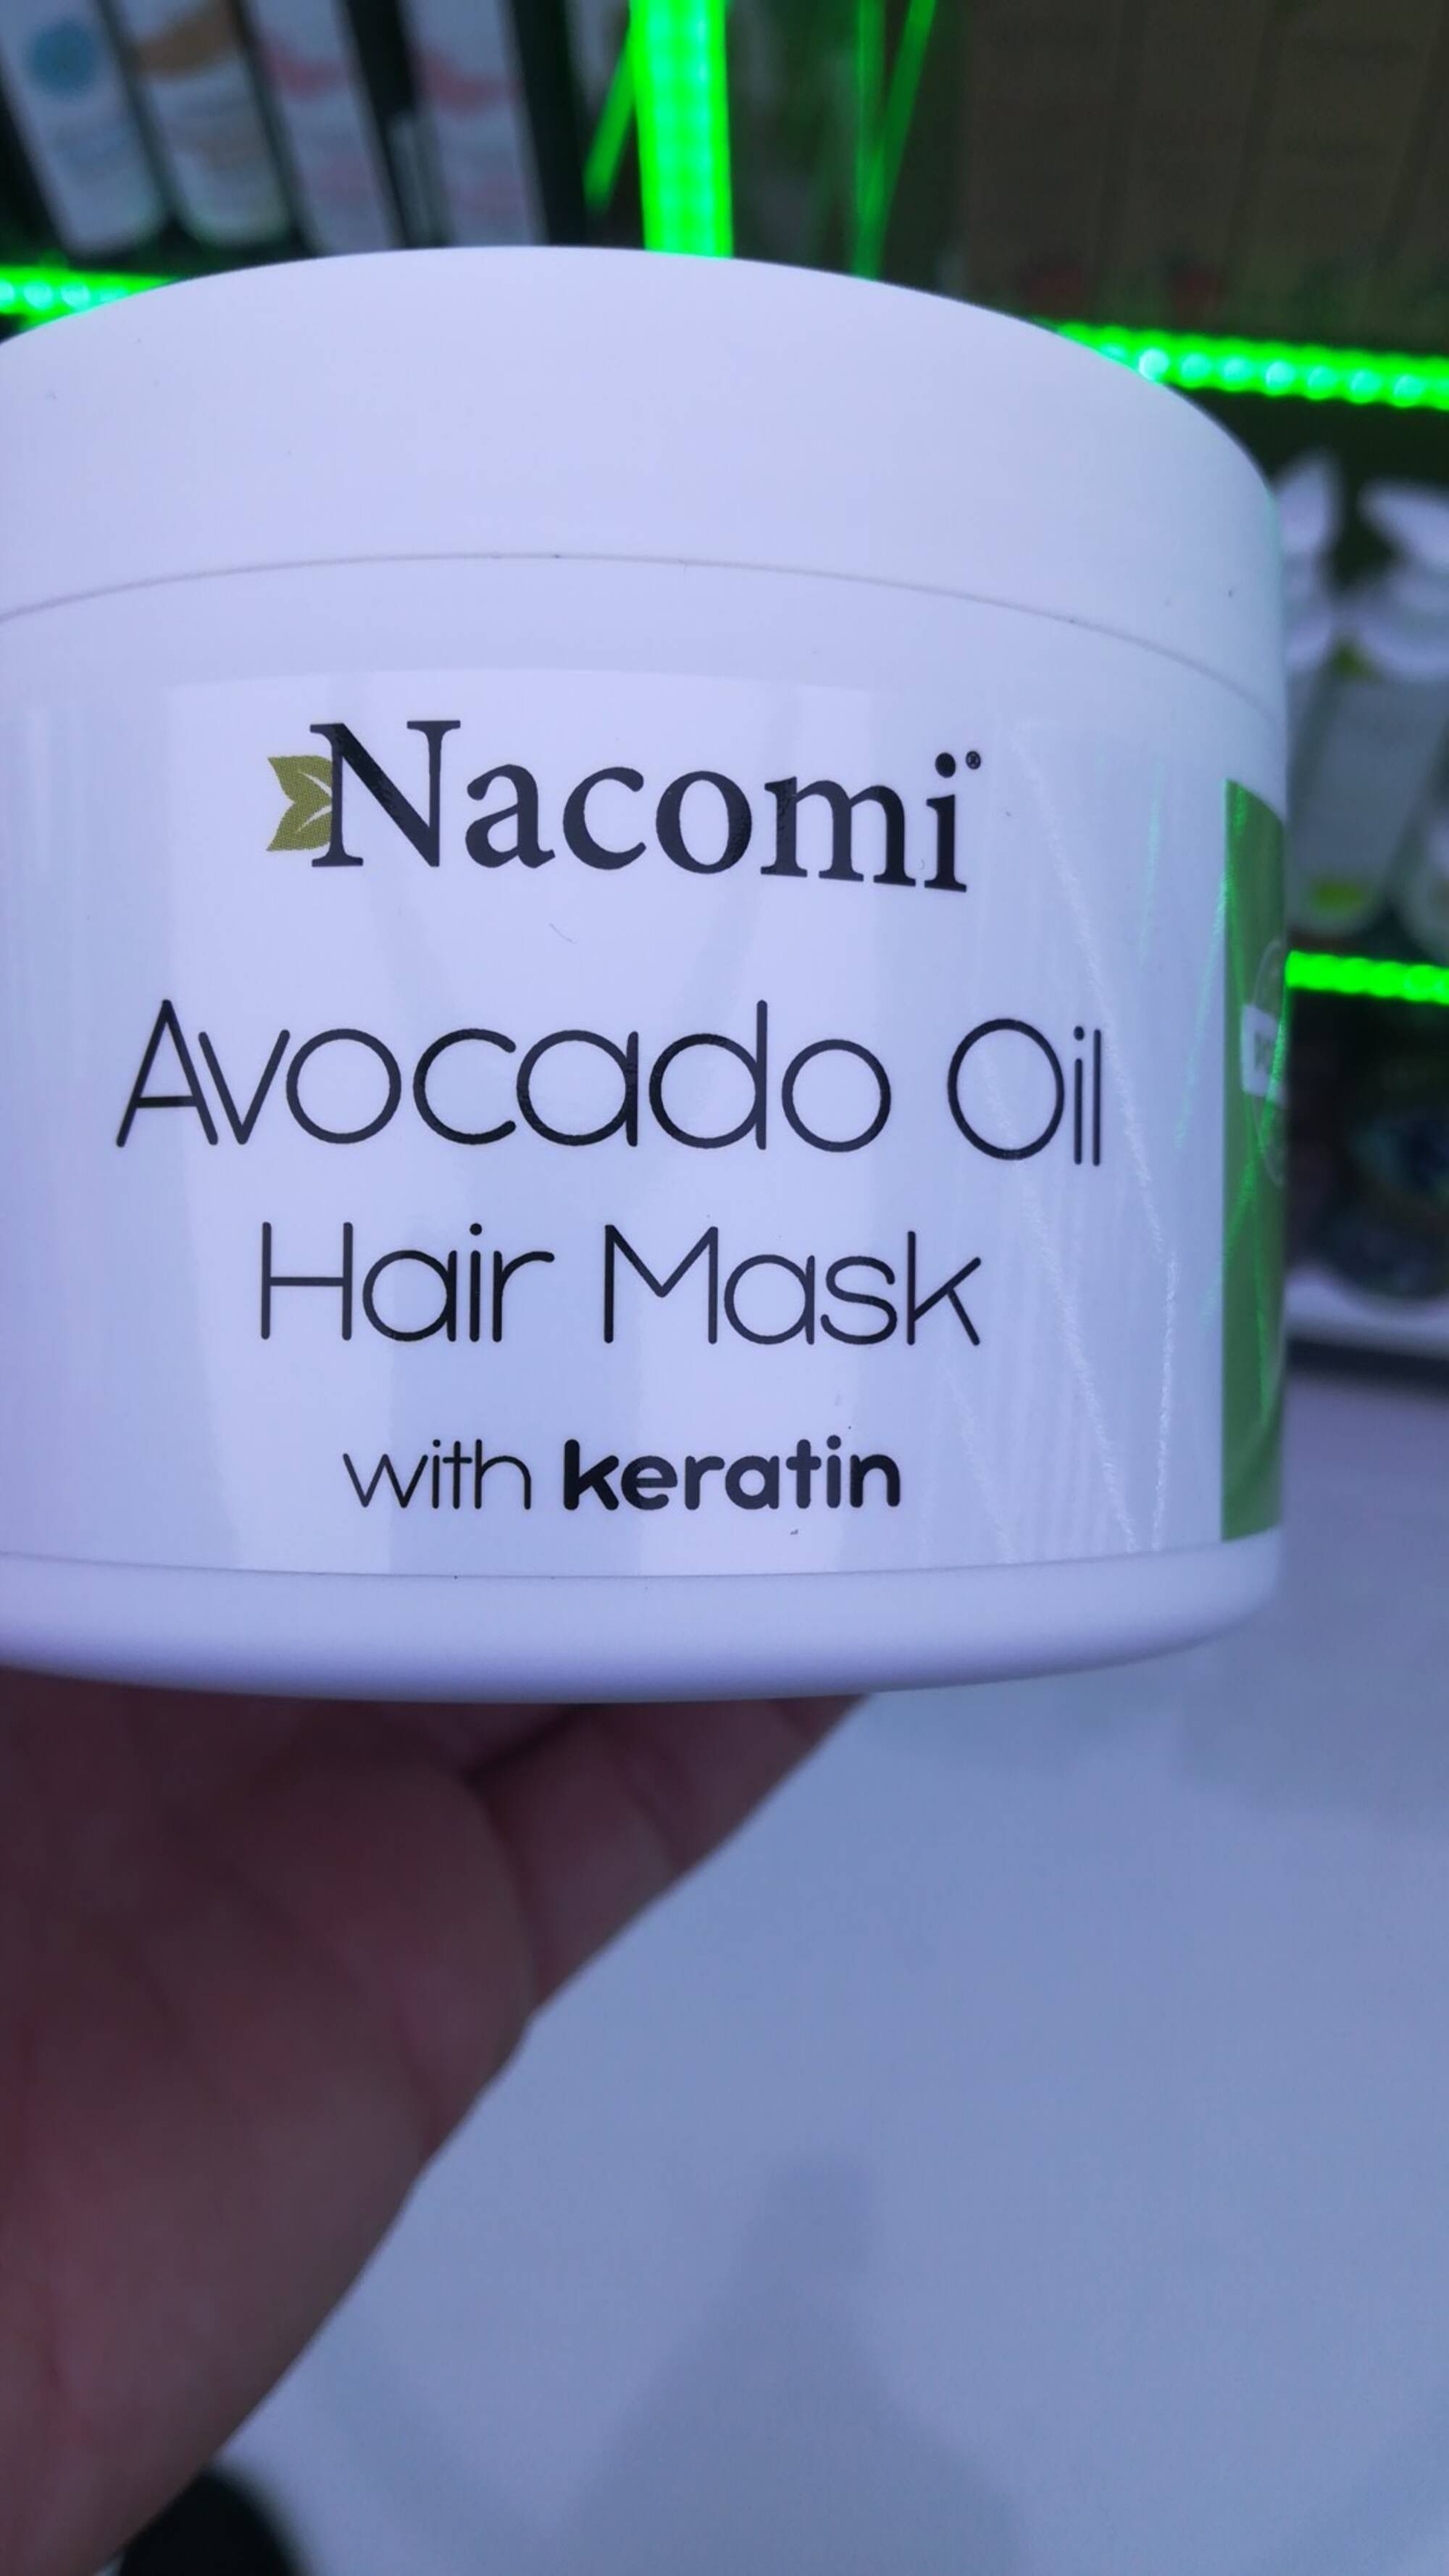 NACOMI - Avocado Oil - Hair Mask with keratin